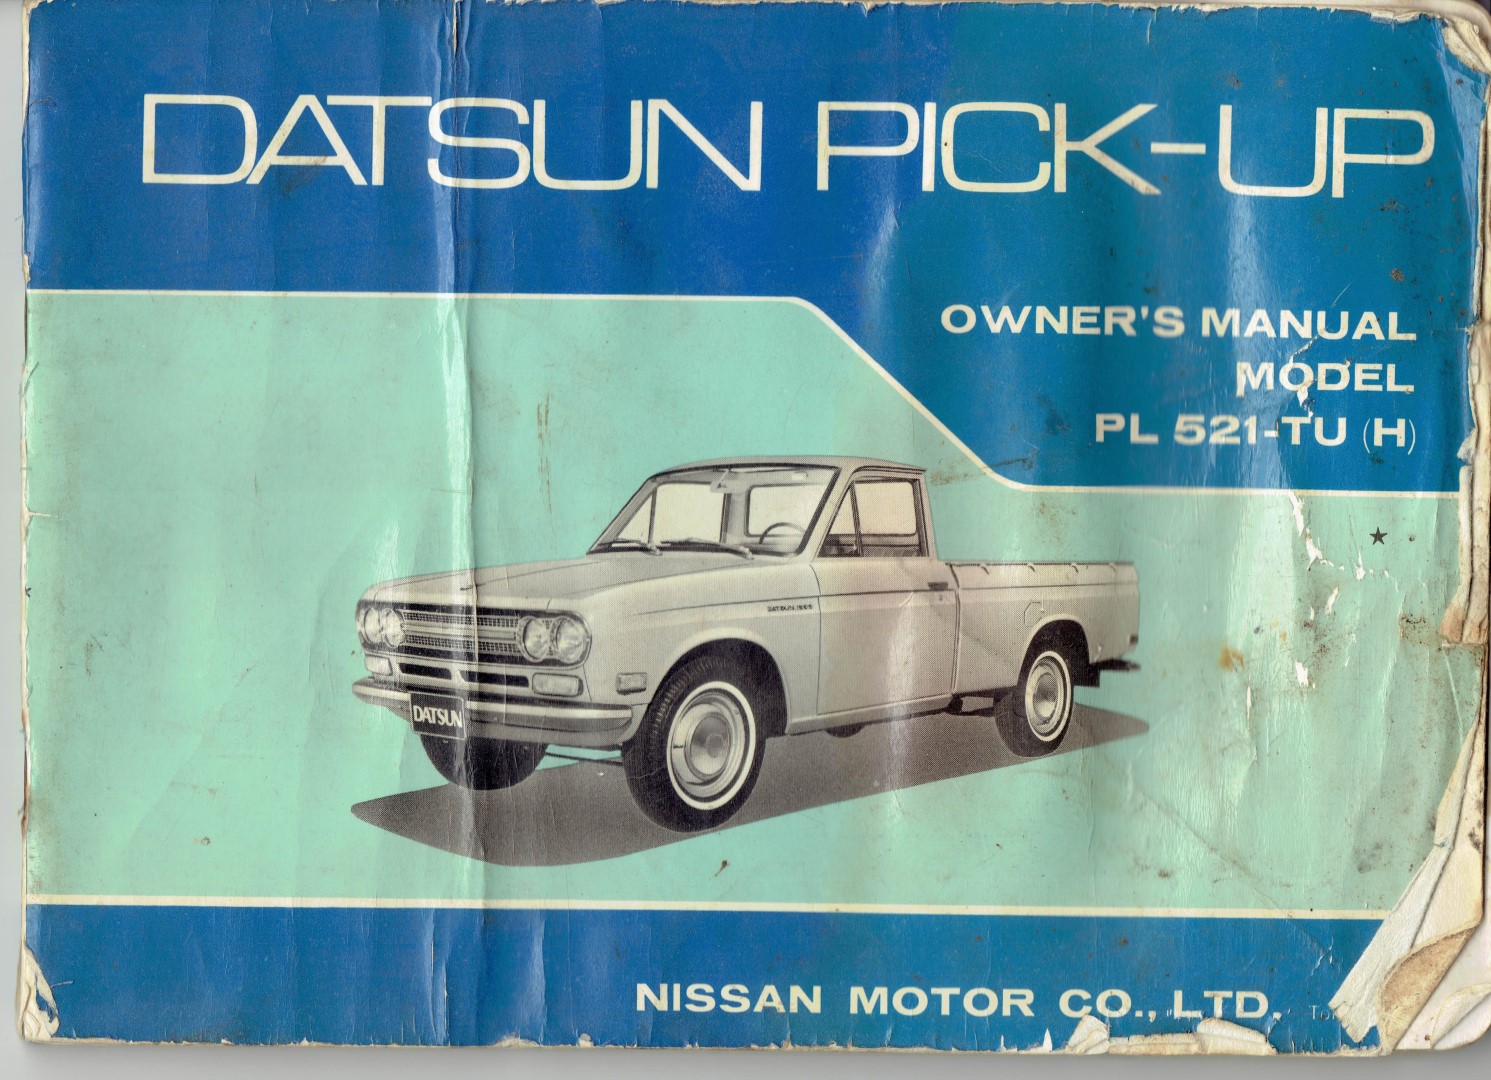 Datsun pickup glove box book_000484 (Large).jpg